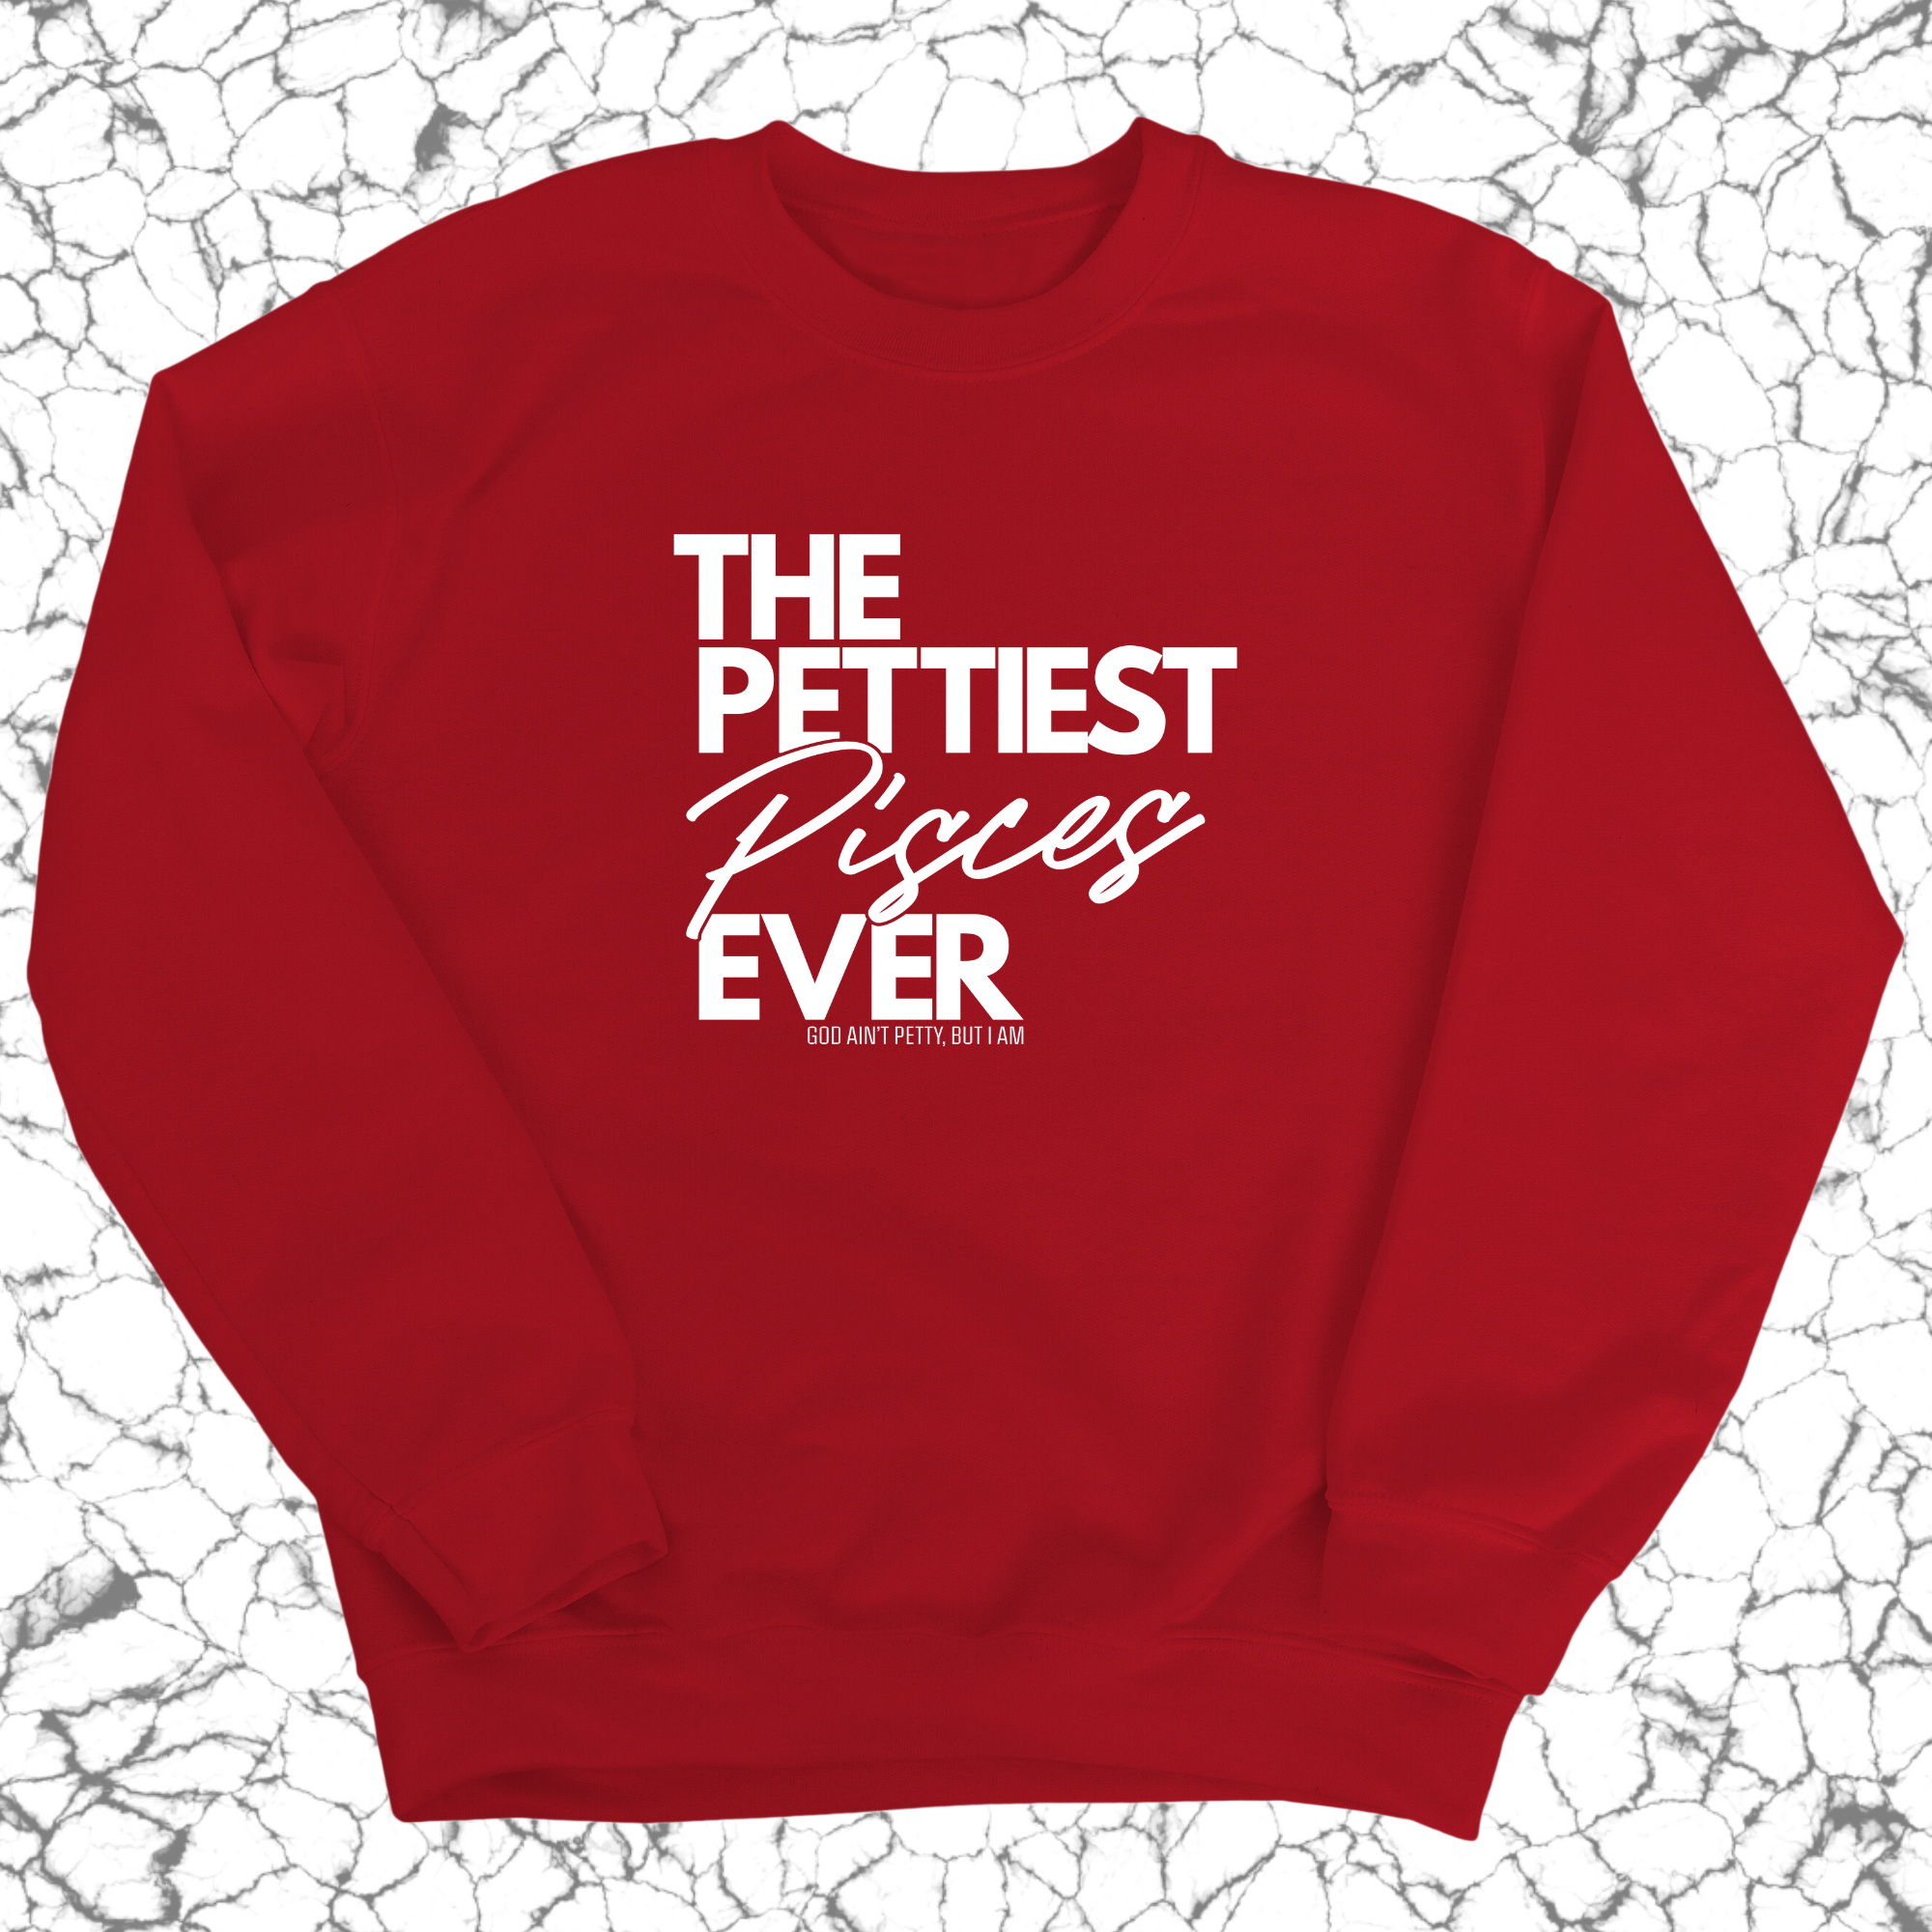 The Pettiest Pisces Ever Unisex Sweatshirt-Sweatshirt-The Original God Ain't Petty But I Am